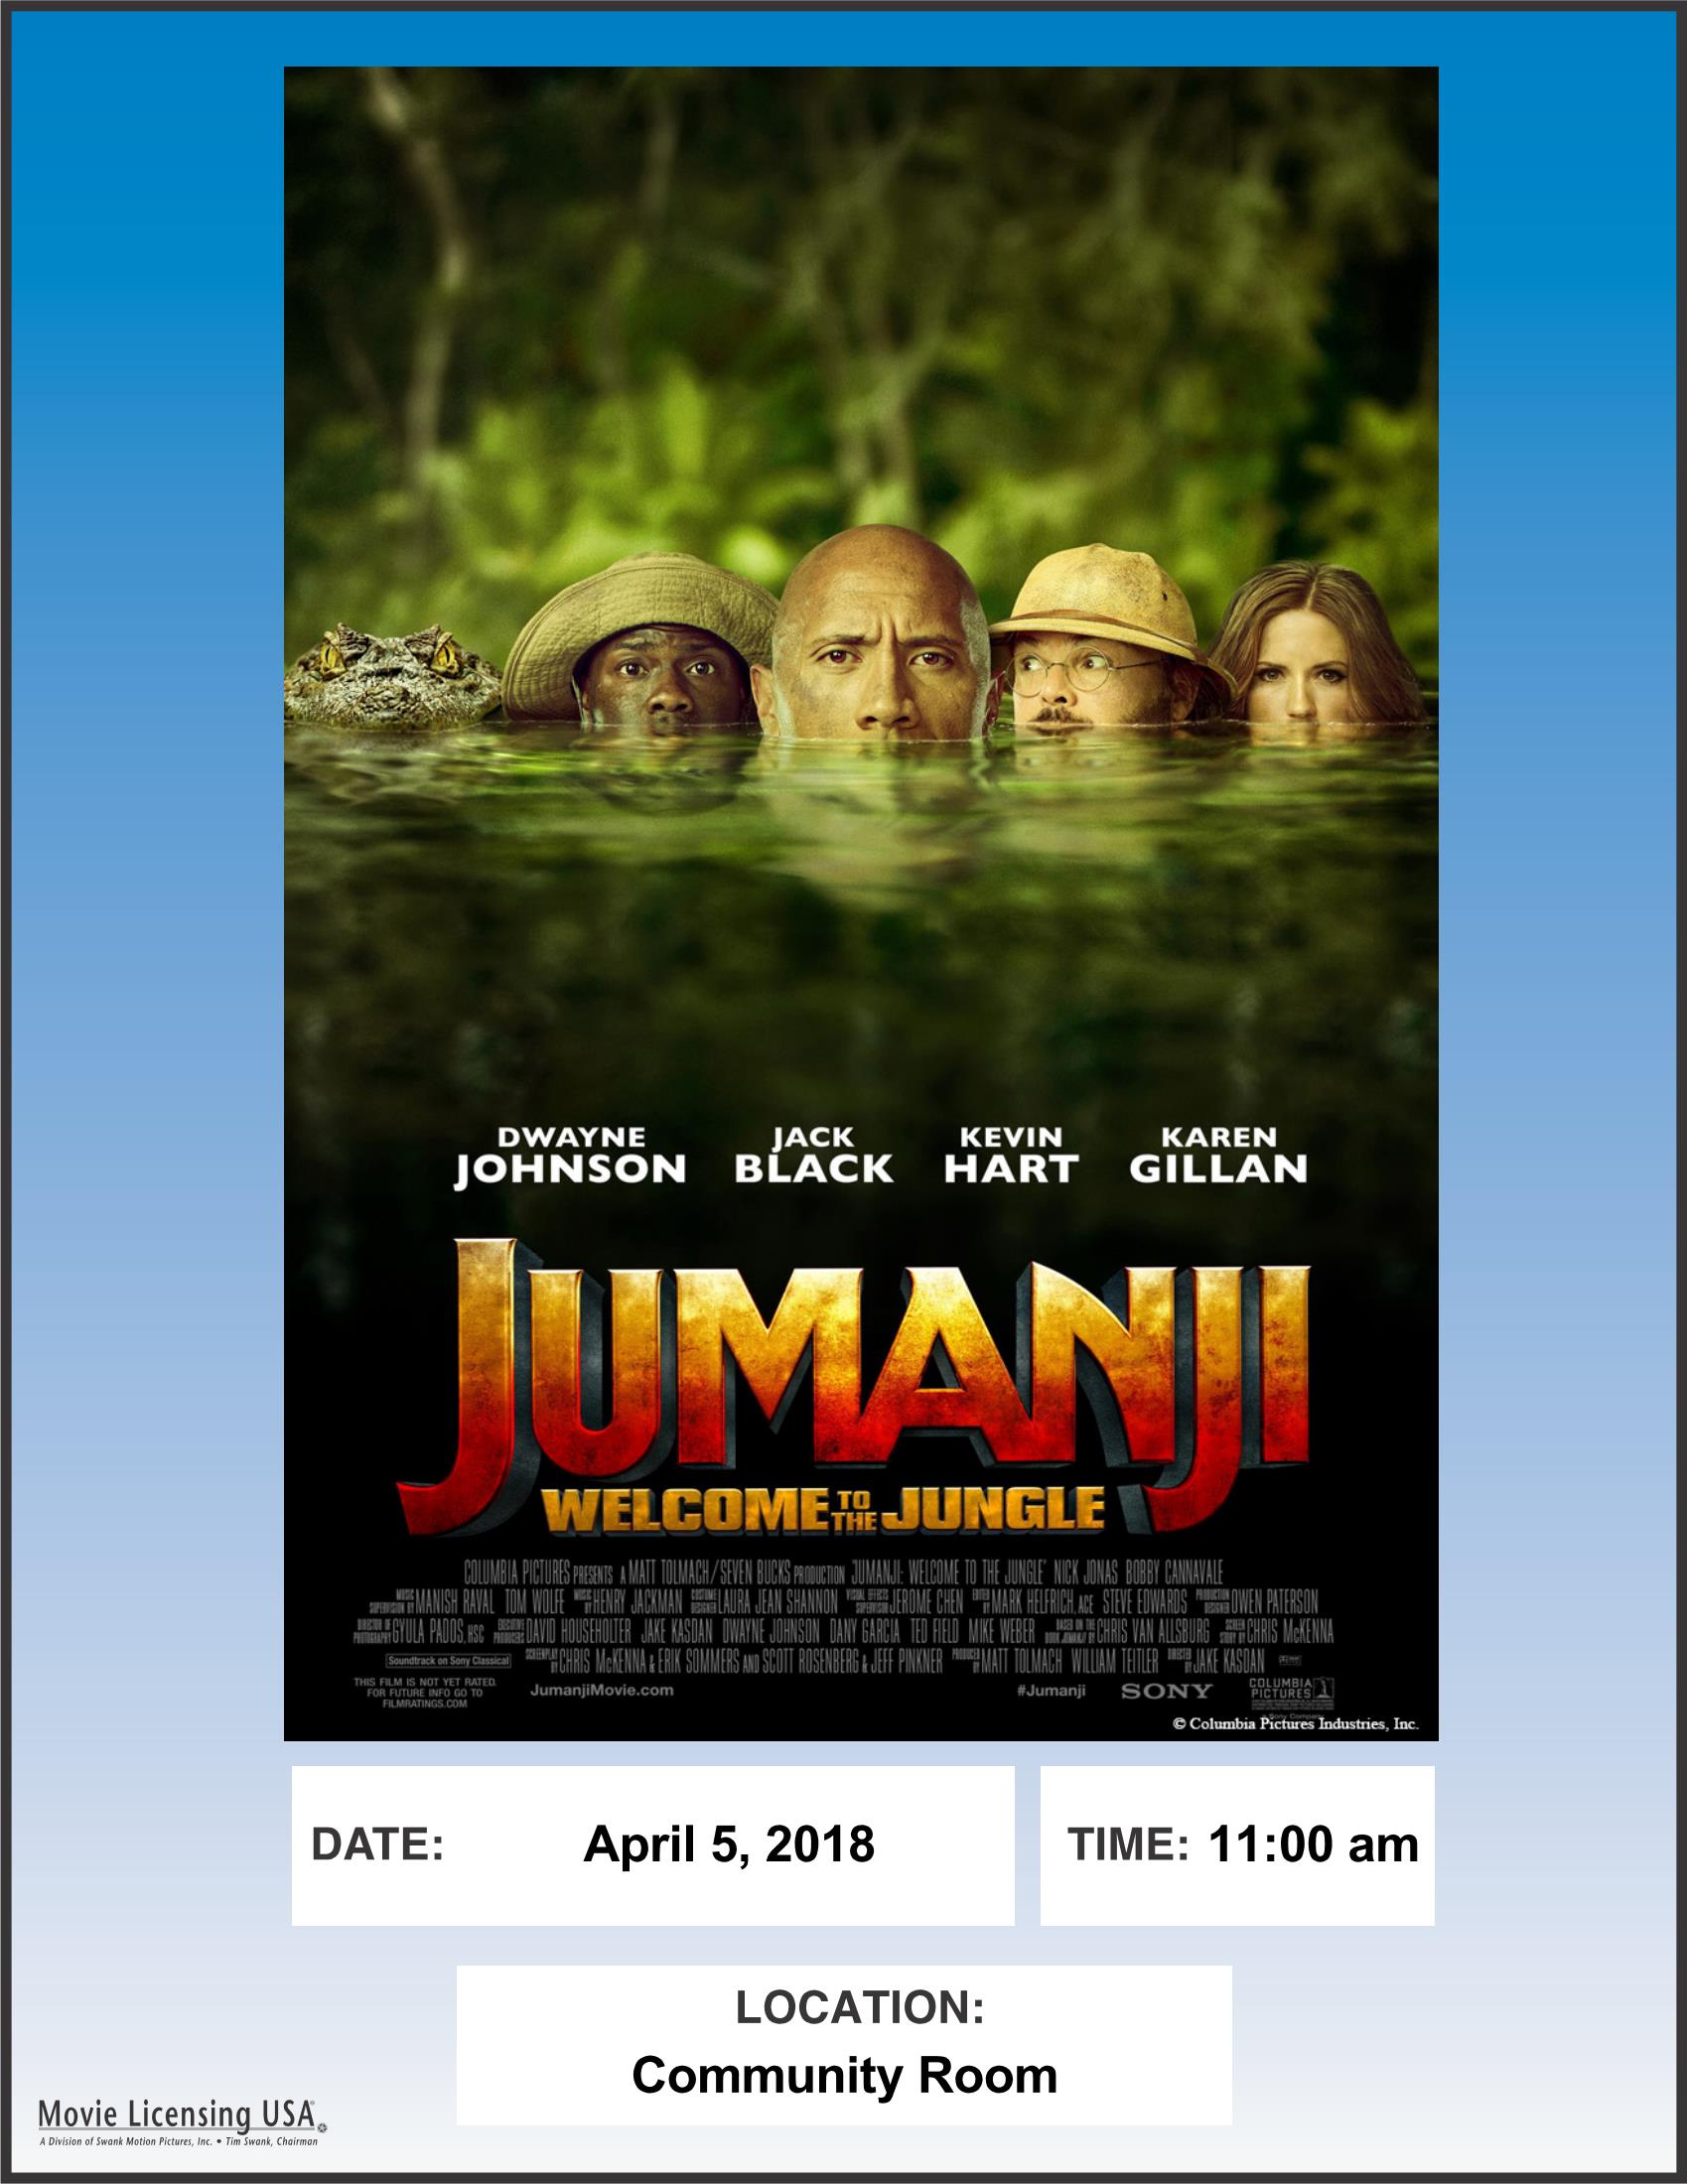 JUMANJI_WELCOME_TO_THE_JUNGLE_poster_Page_1.jpeg